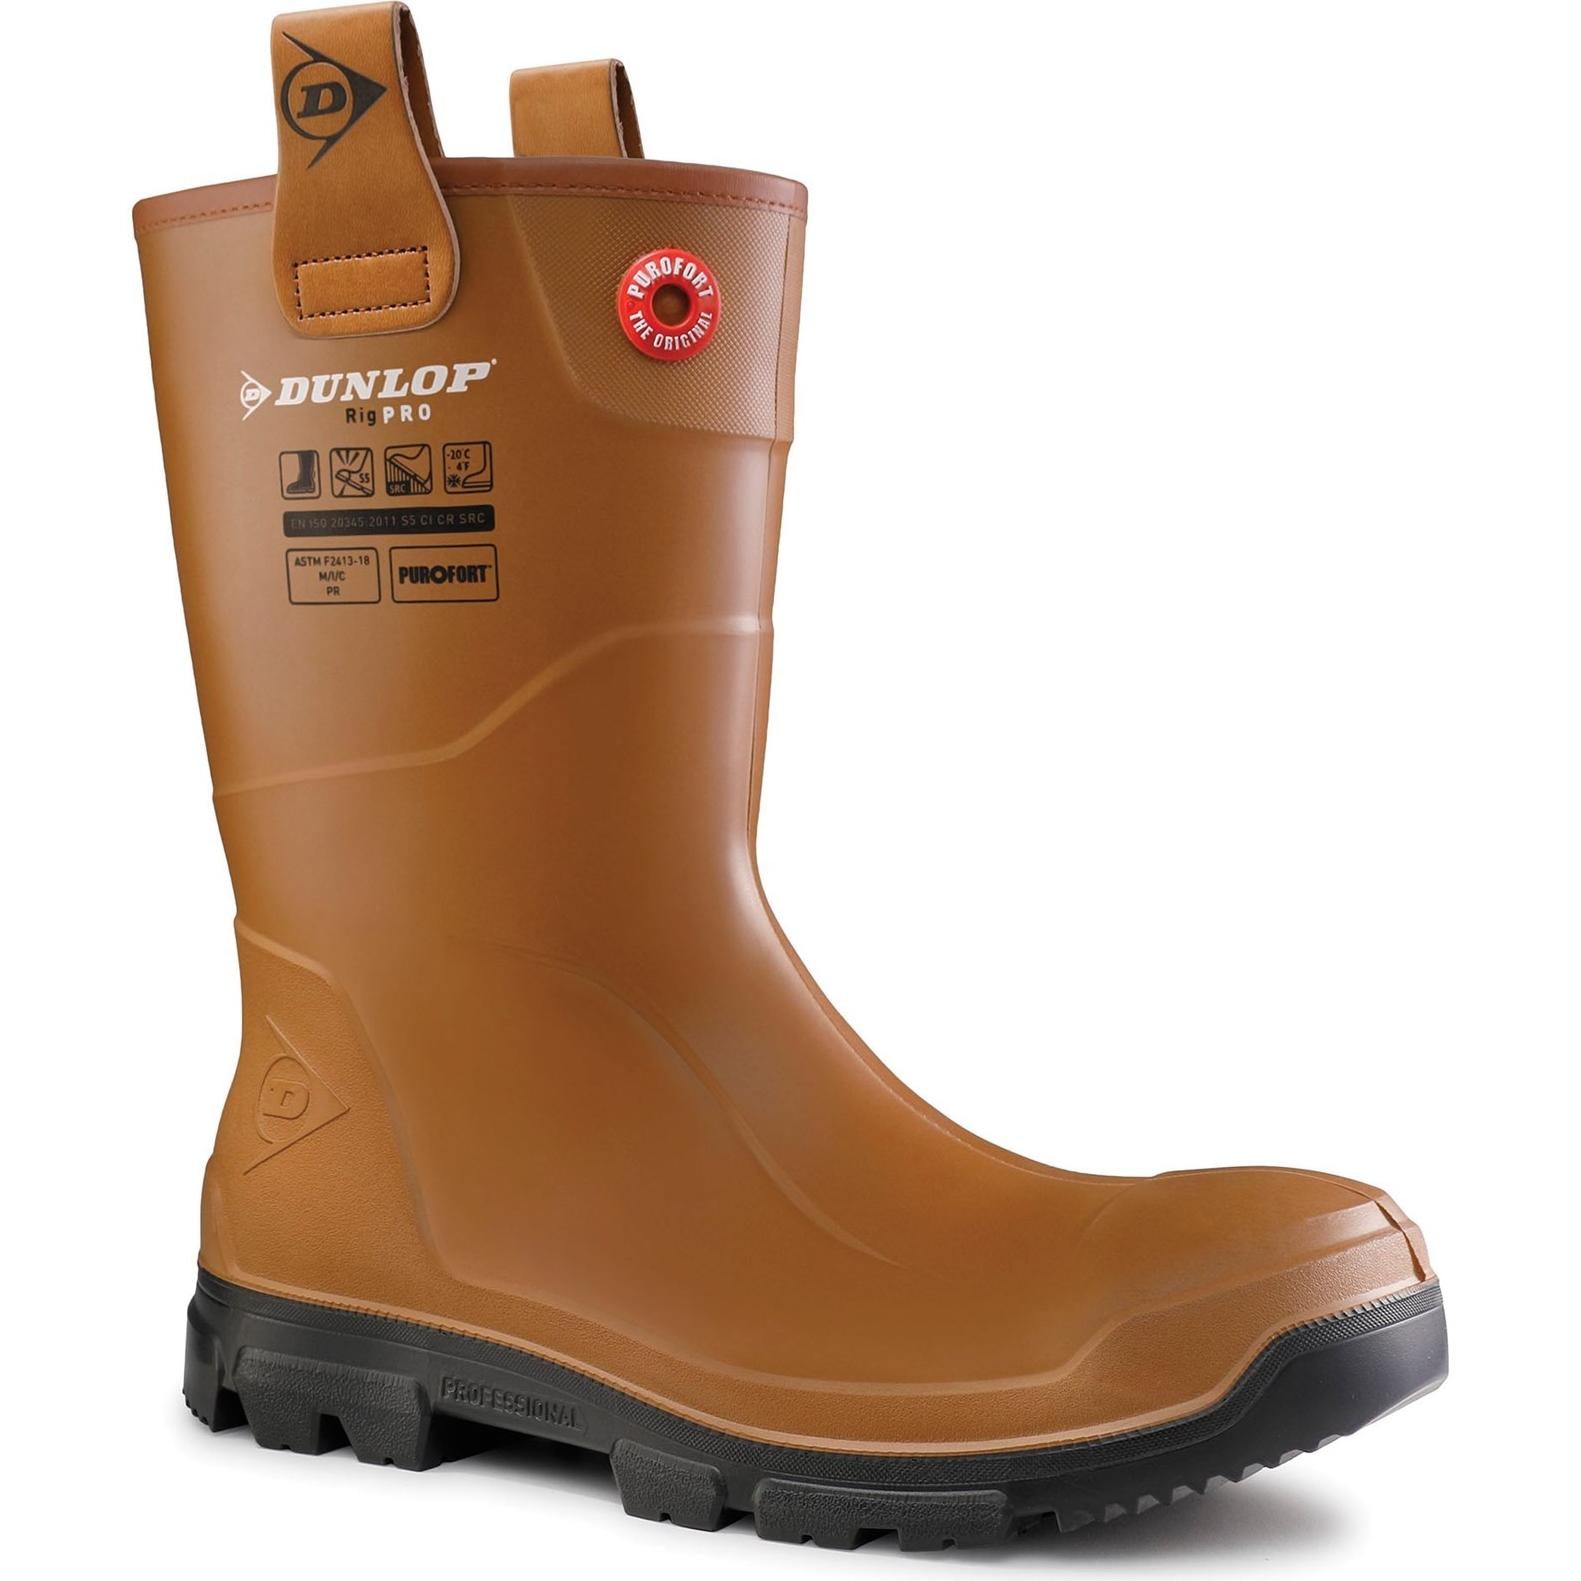 Dunlop Purofort RigPRO Full Safety Wellington Boots